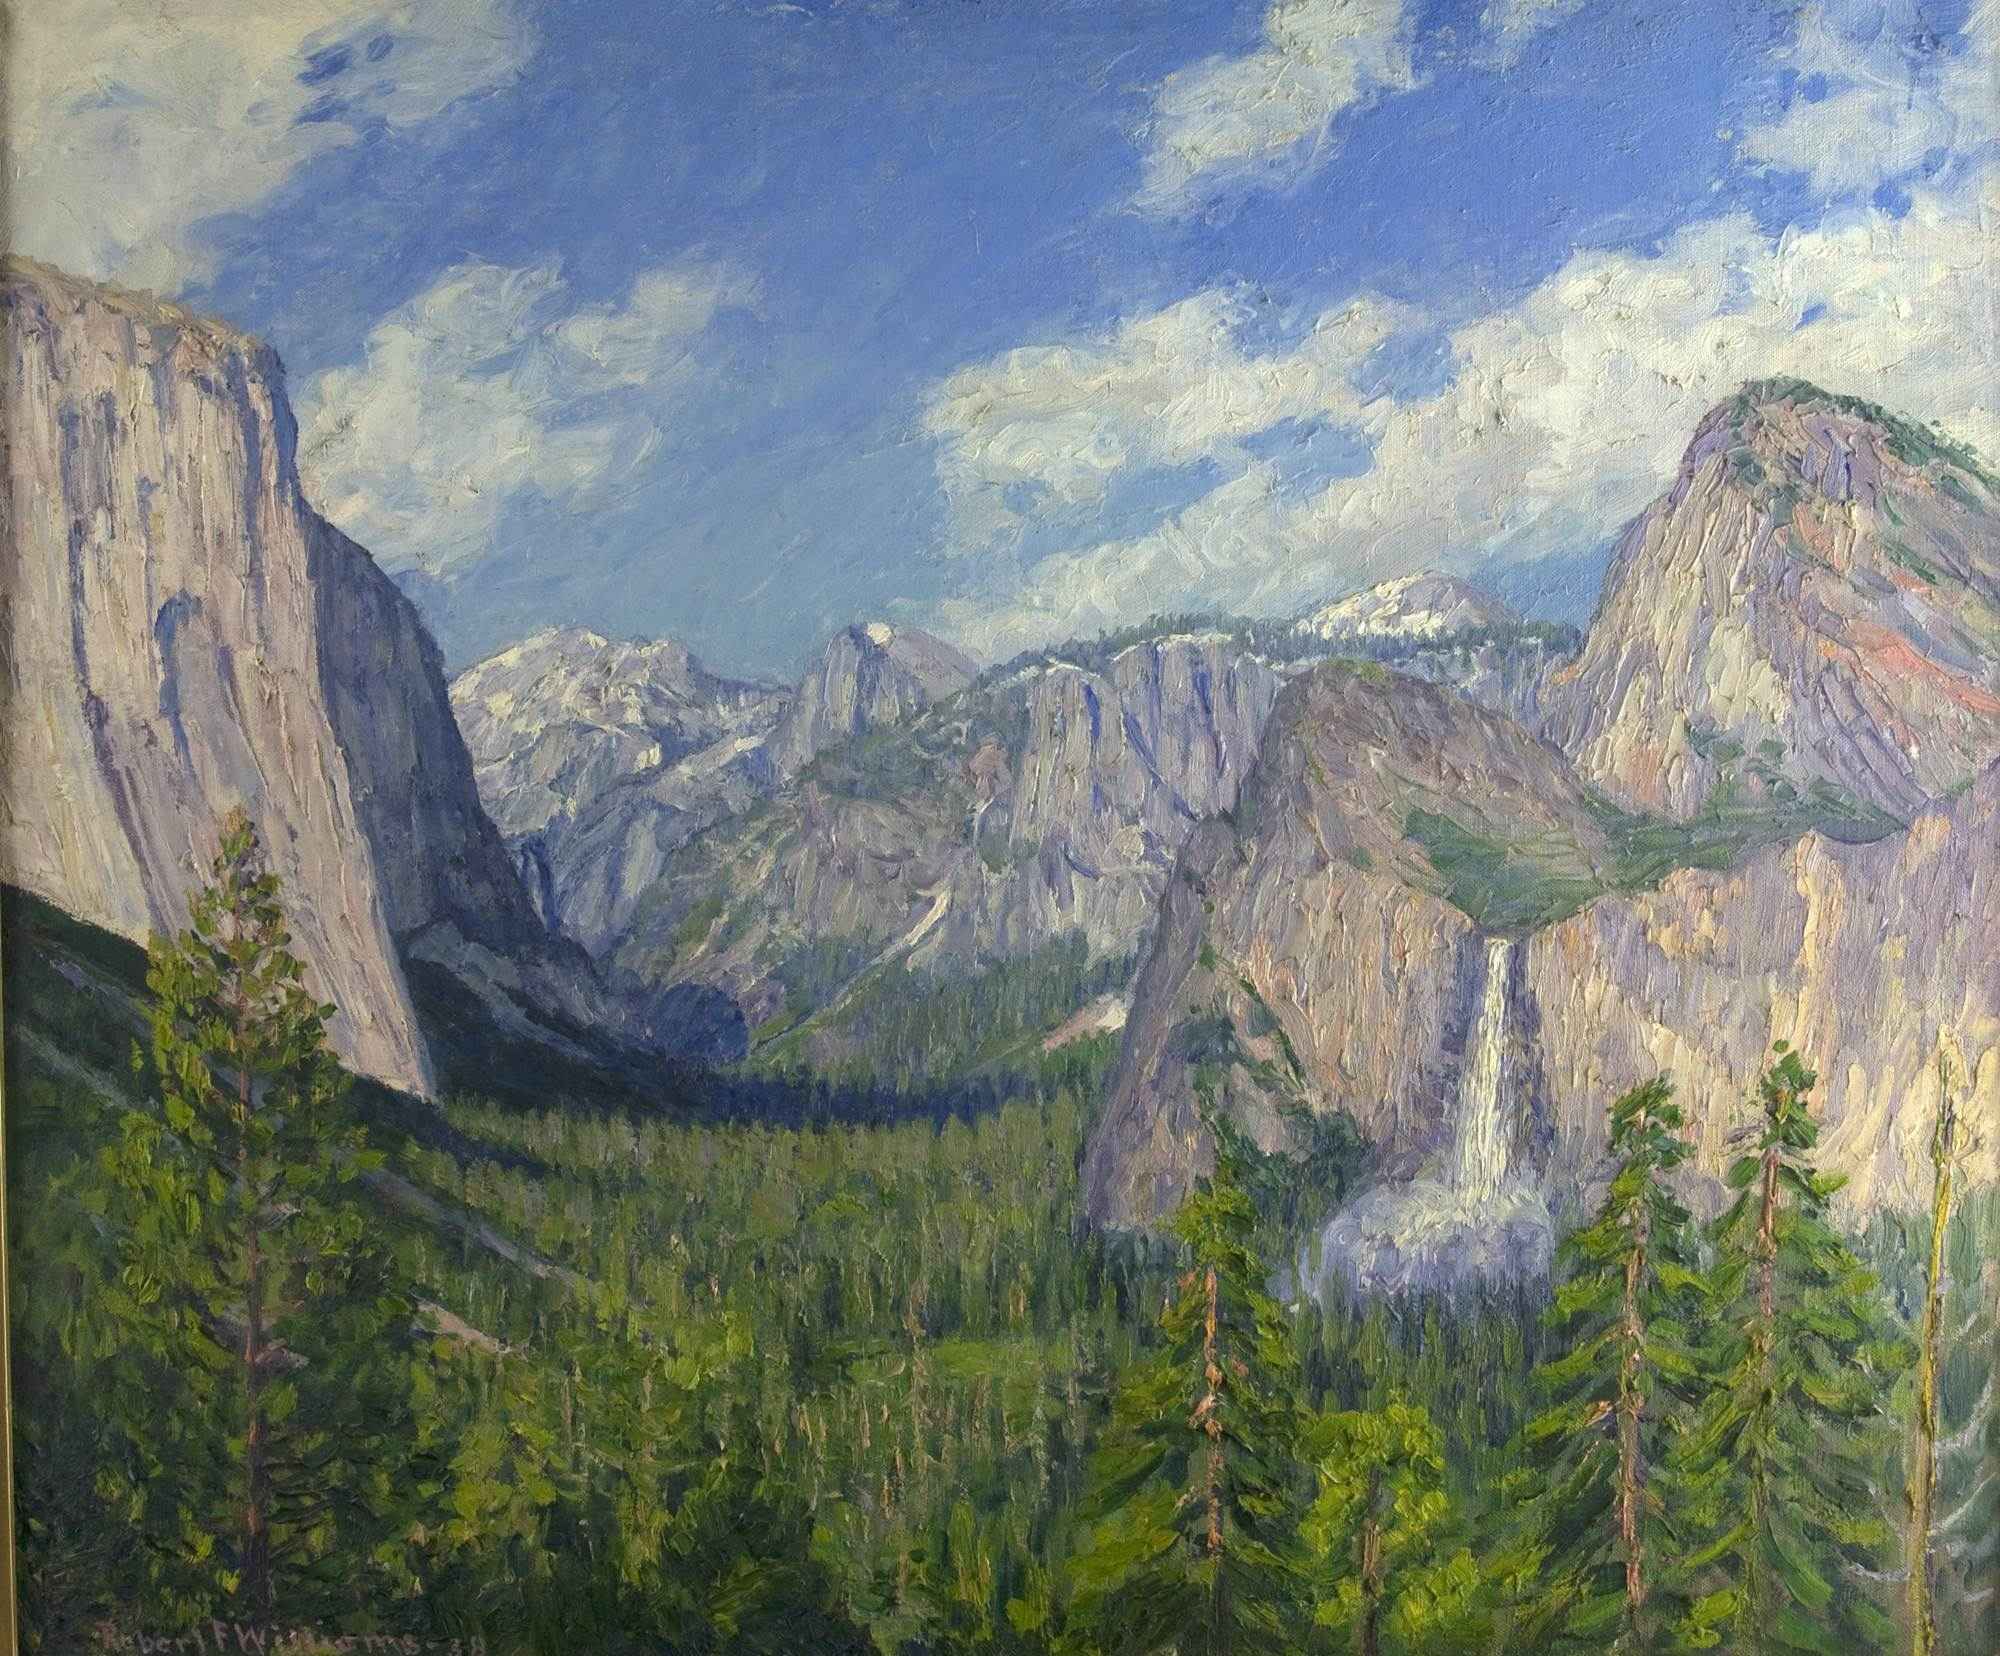 Painting Yosemite Valley